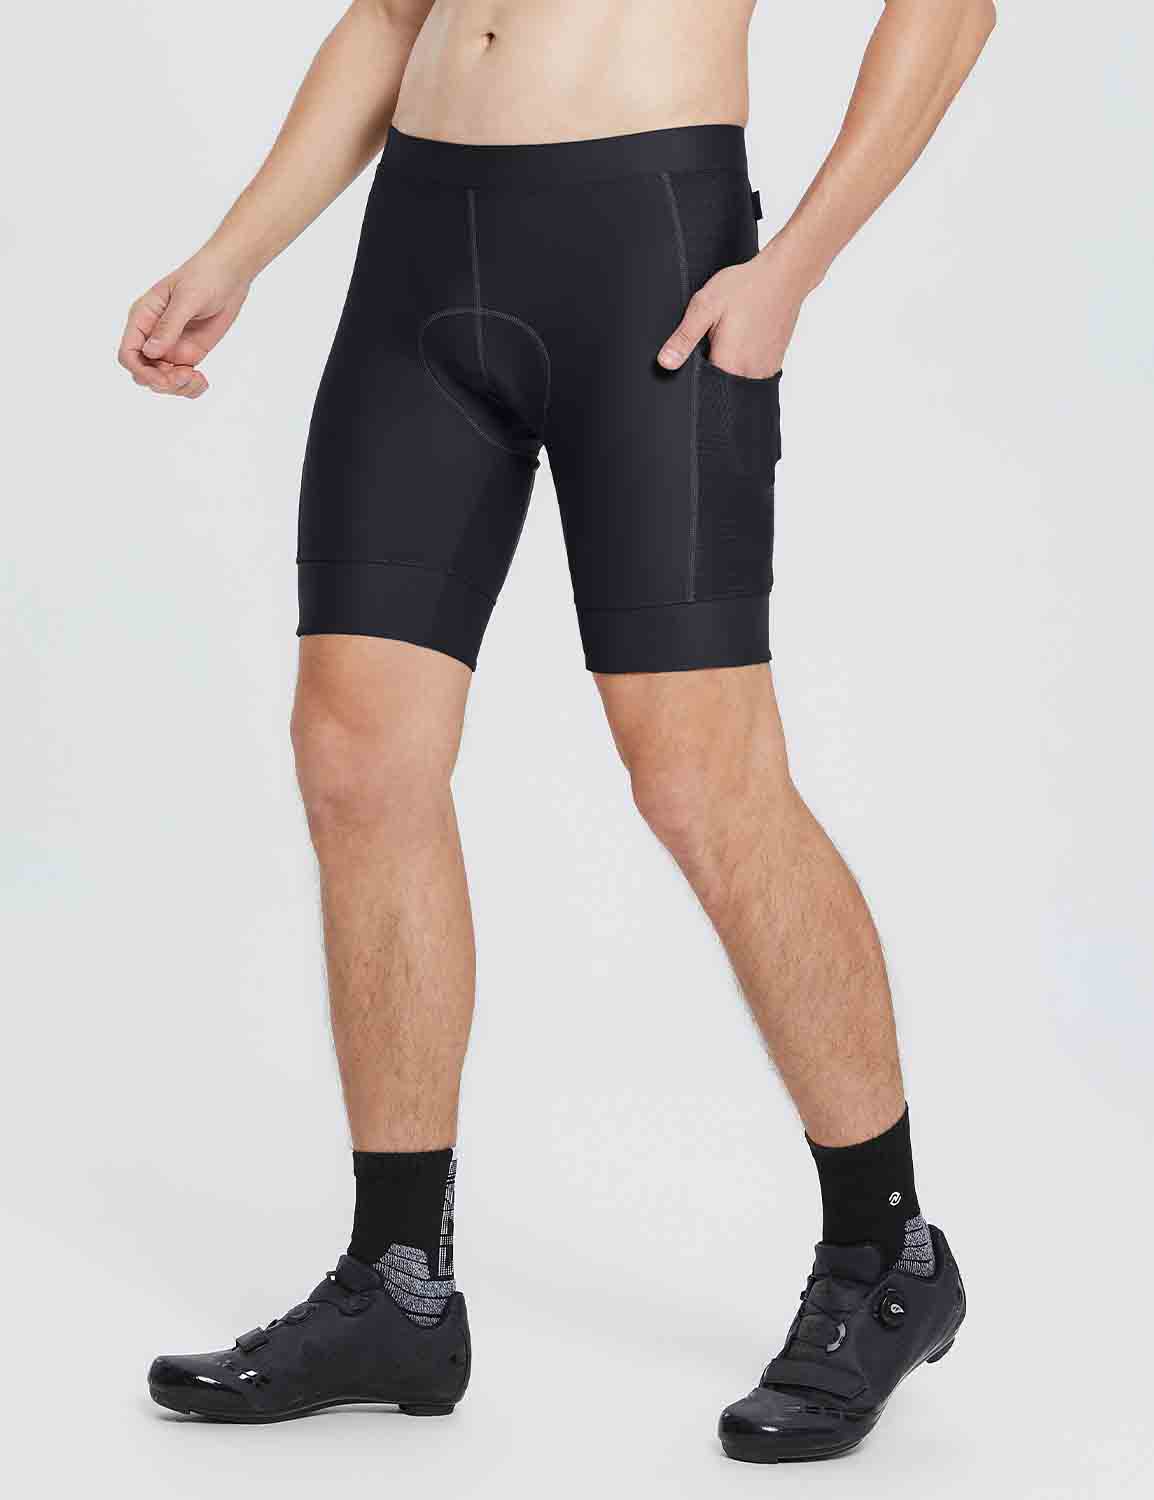 BALEAF Men's Padded Bike Shorts Cycling Tights 3D Padding Bicycle  Accessories Road Biking MTB Pockets UPF 50+